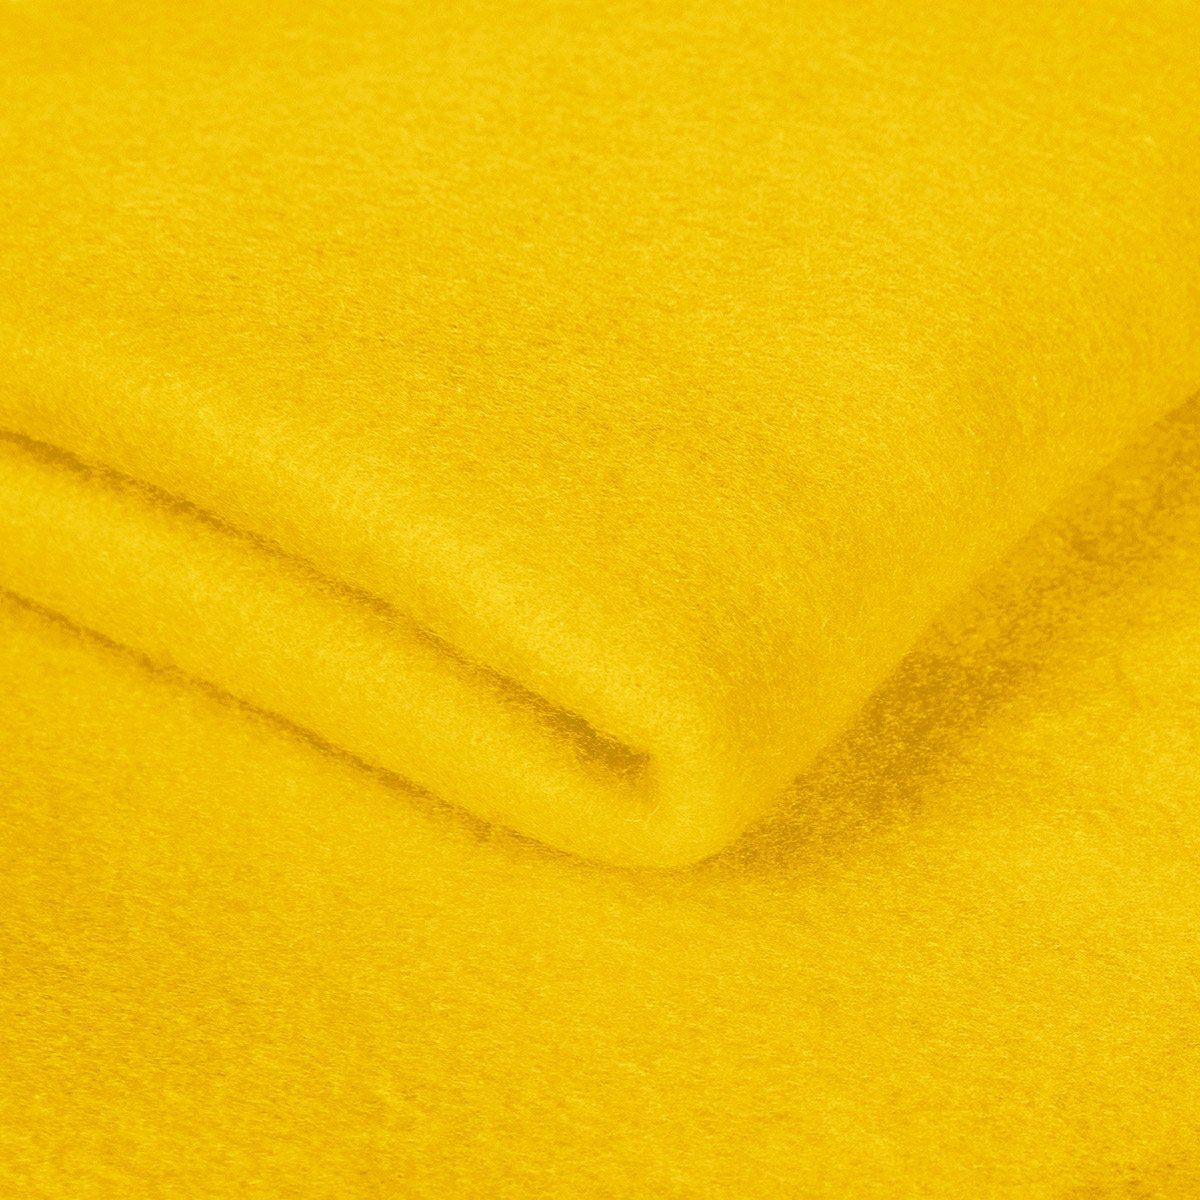 Kelly Green Solid Anti-Pill Fleece Fabric - Fleece Fabric by the Yard